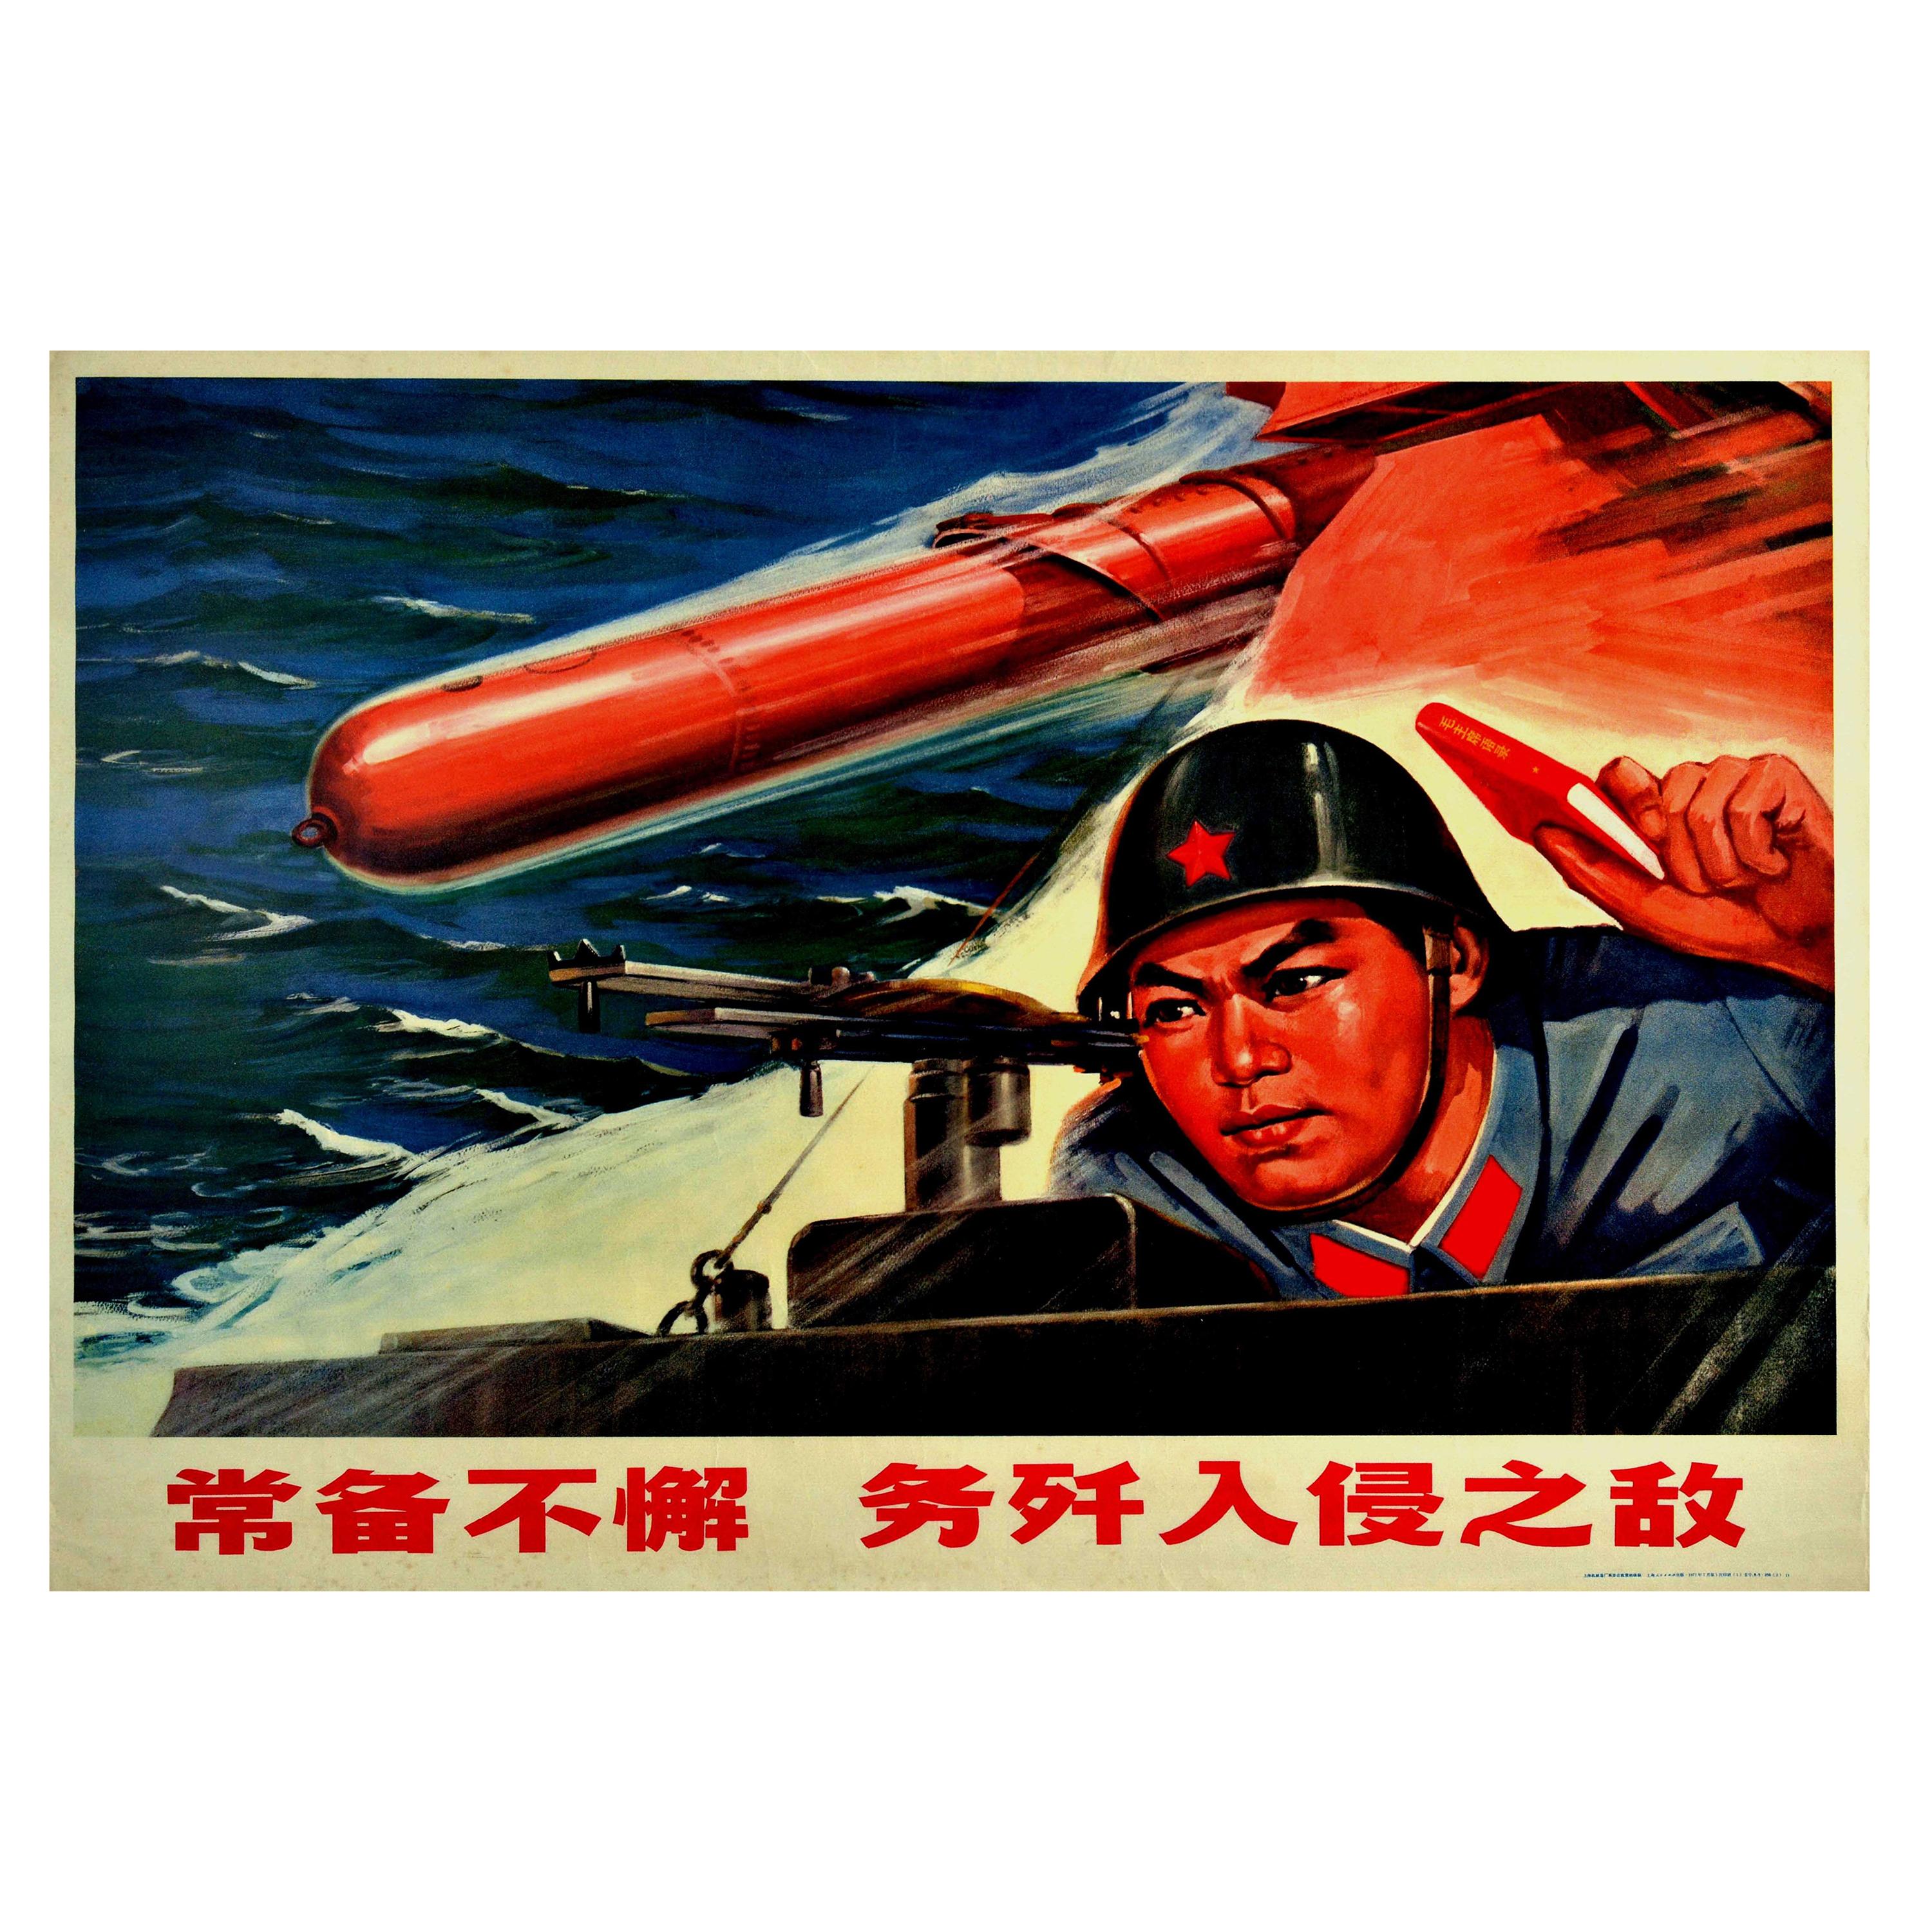 Original Vintage Poster Destroy Invading Enemies China Propaganda Navy Torpedo